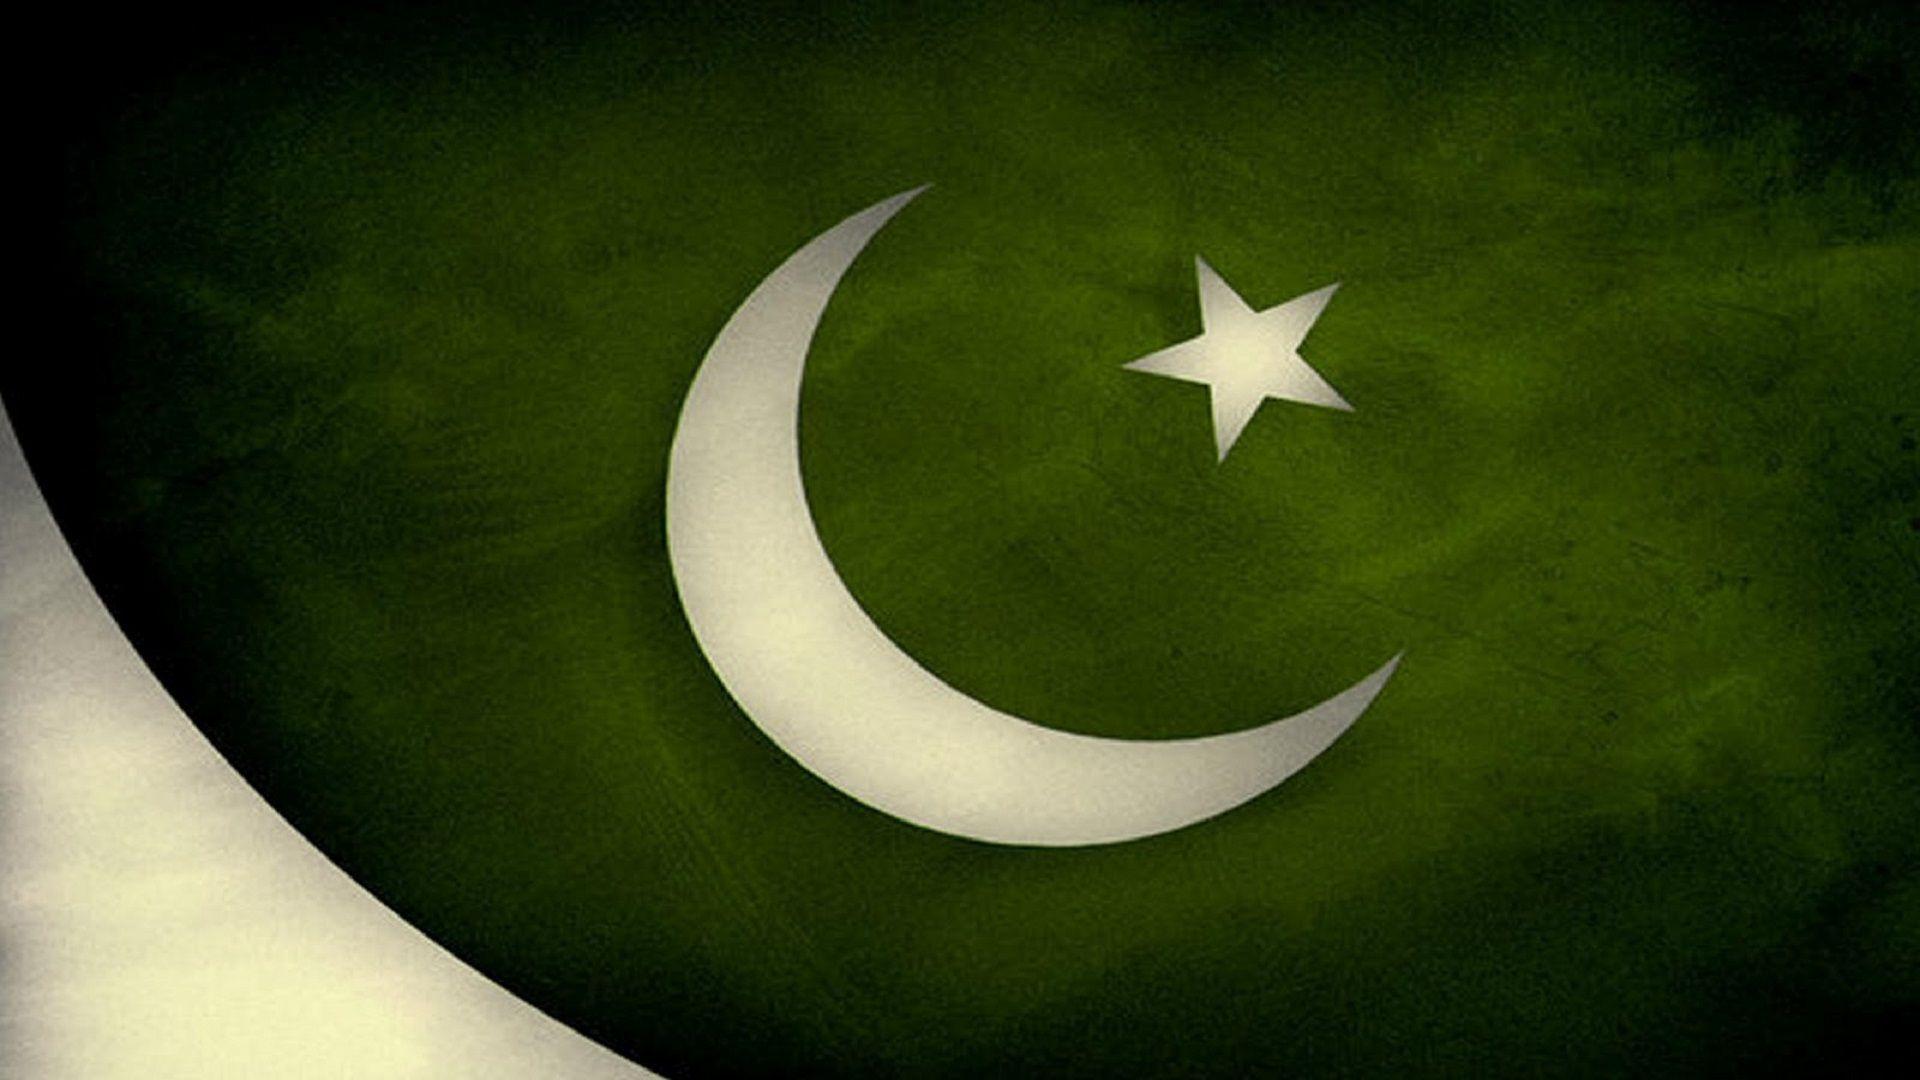 Pakistan Flag Wallpapers  Top Free Pakistan Flag Backgrounds